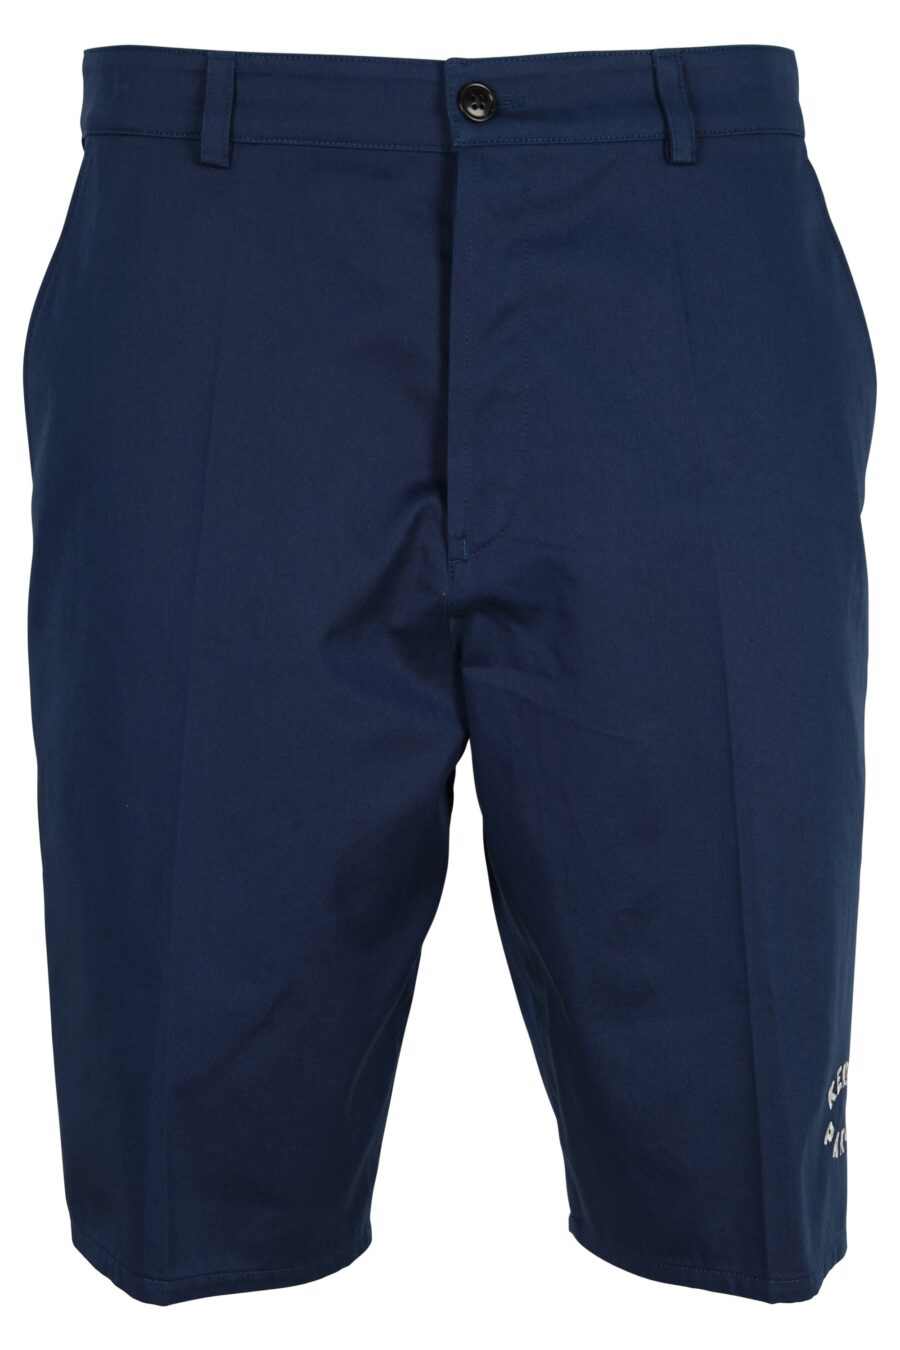 Dark blue shorts with white "boke flower" mini logo - 3612230638433